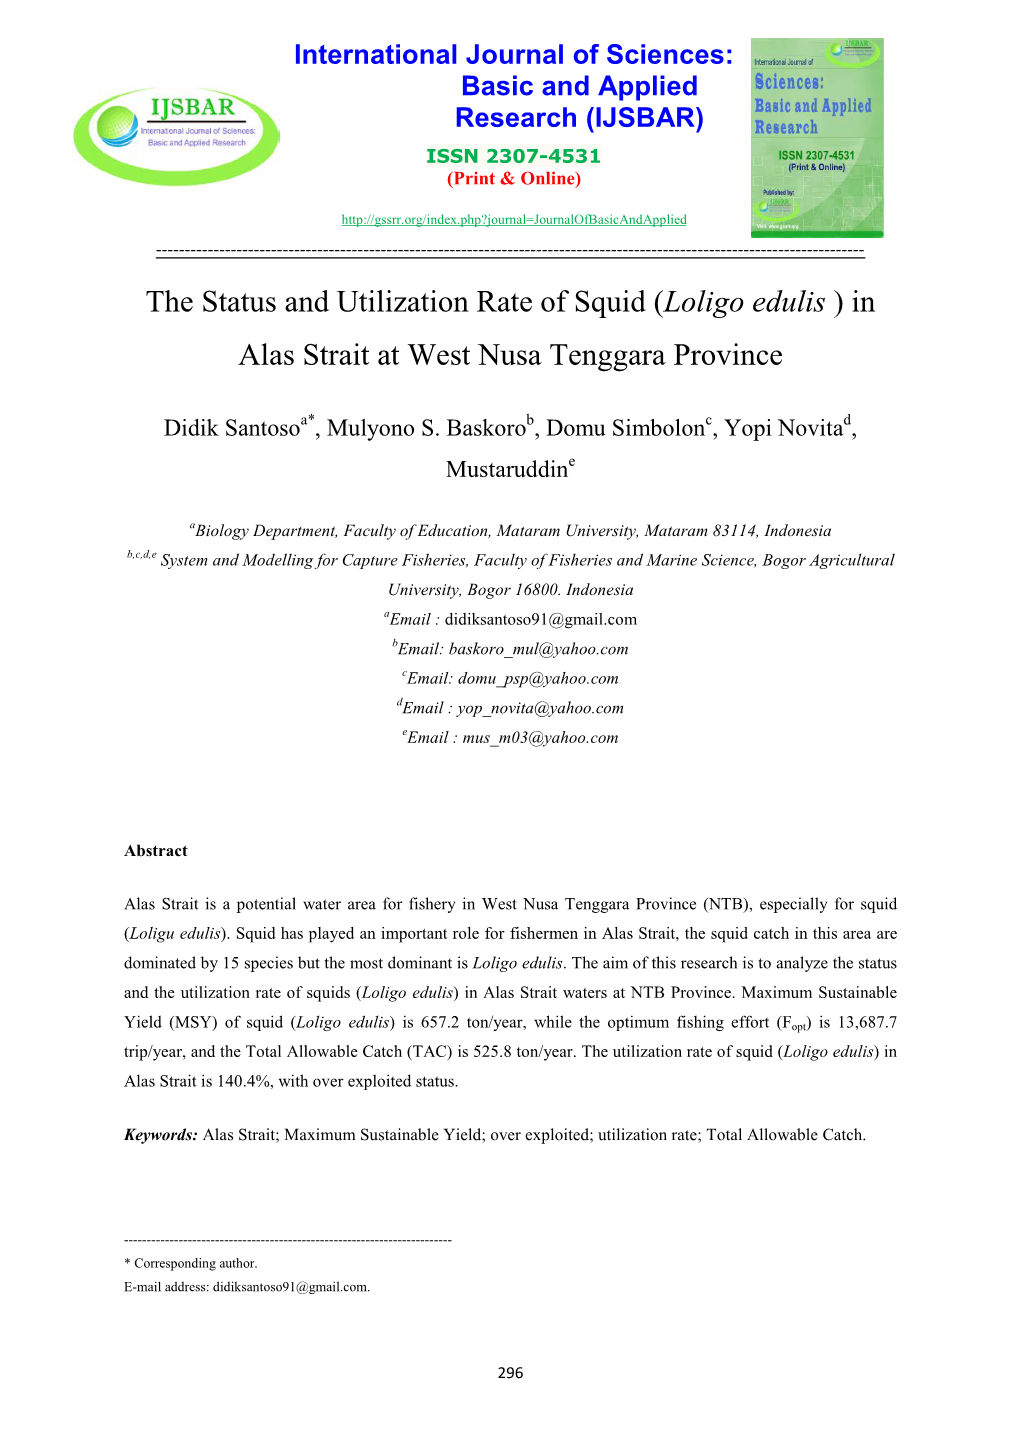 The Status and Utilization Rate of Squid (Loligo Edulis ) in Alas Strait at West Nusa Tenggara Province